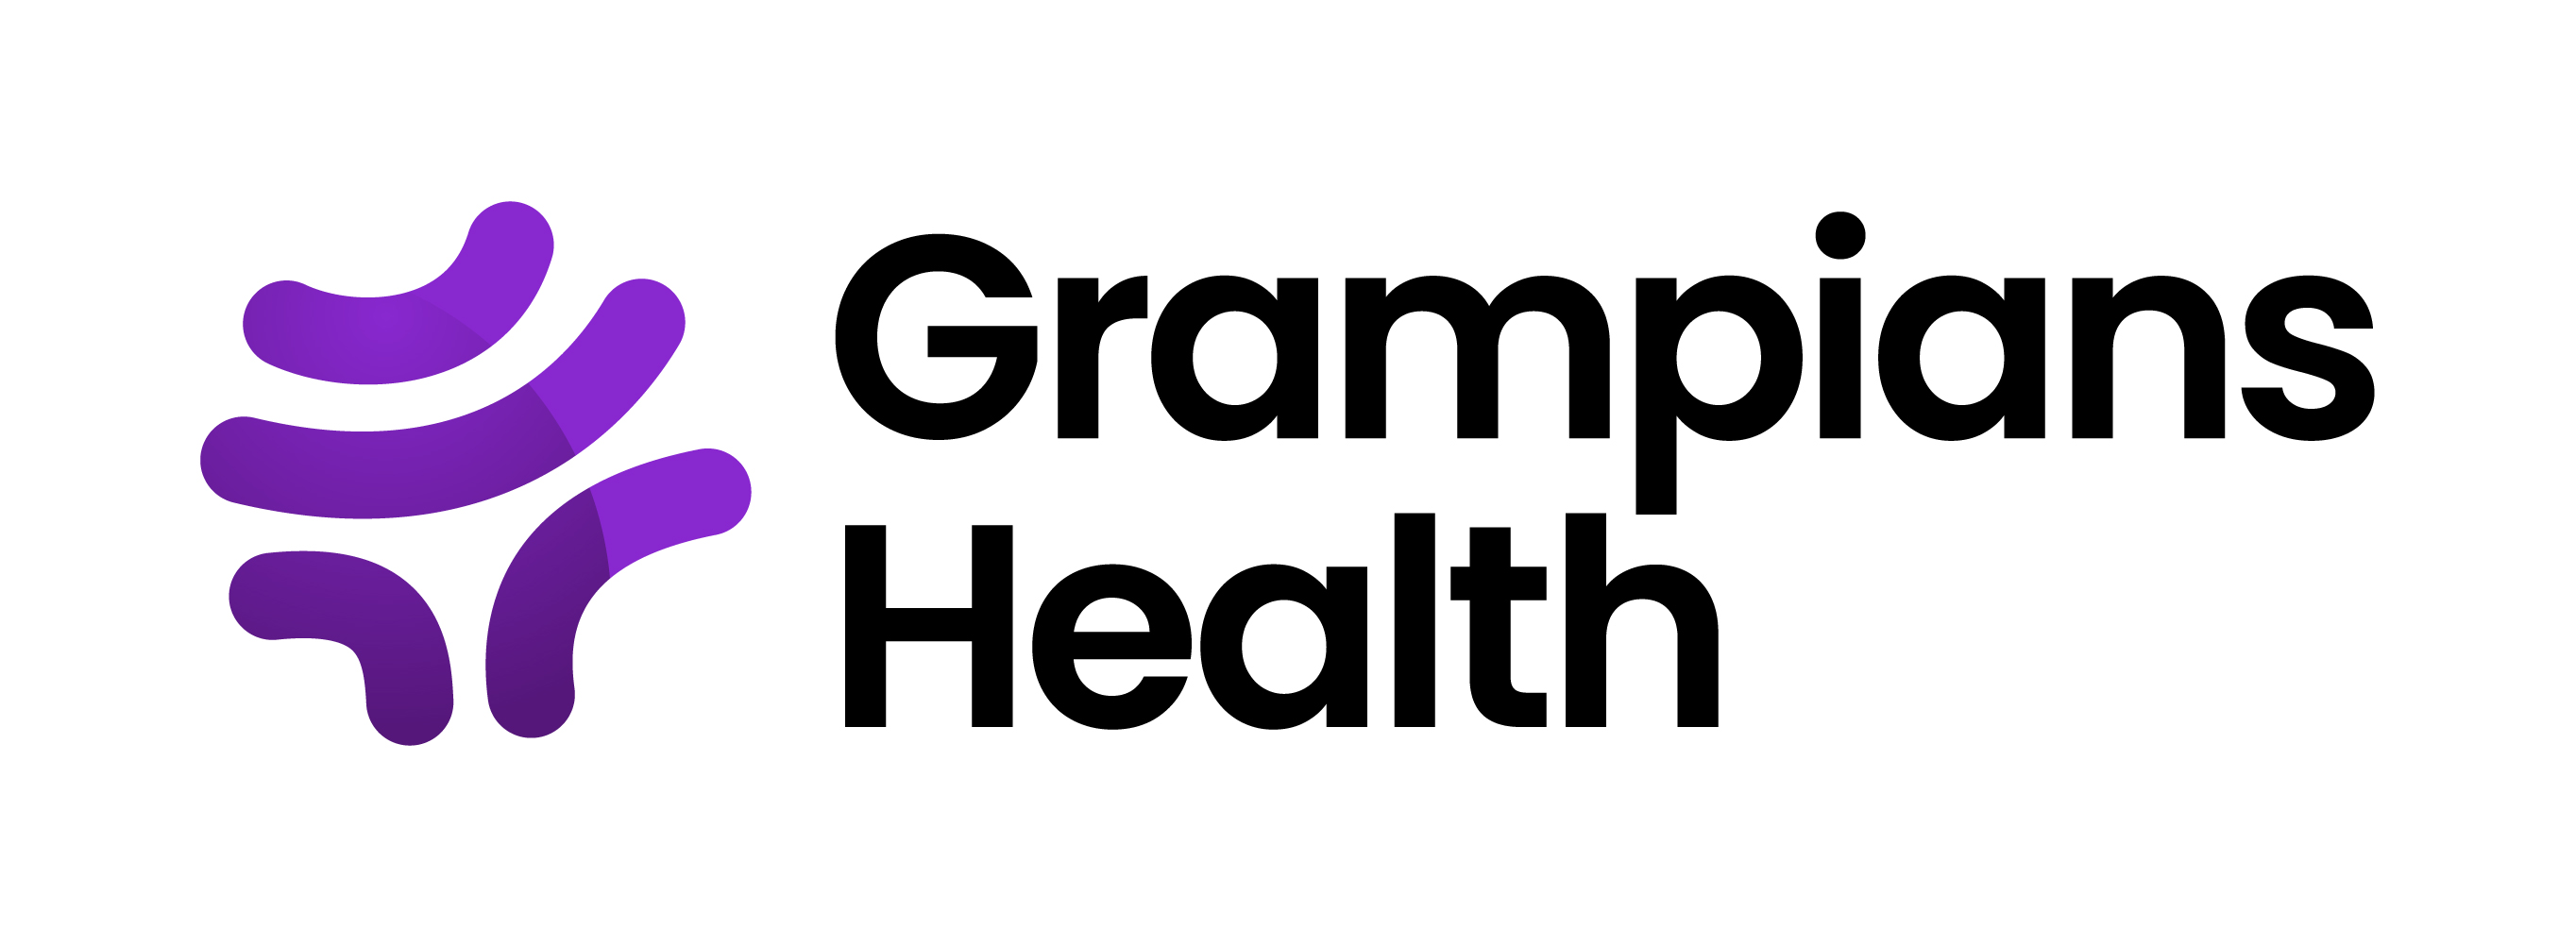 Grampians Health Archive logo